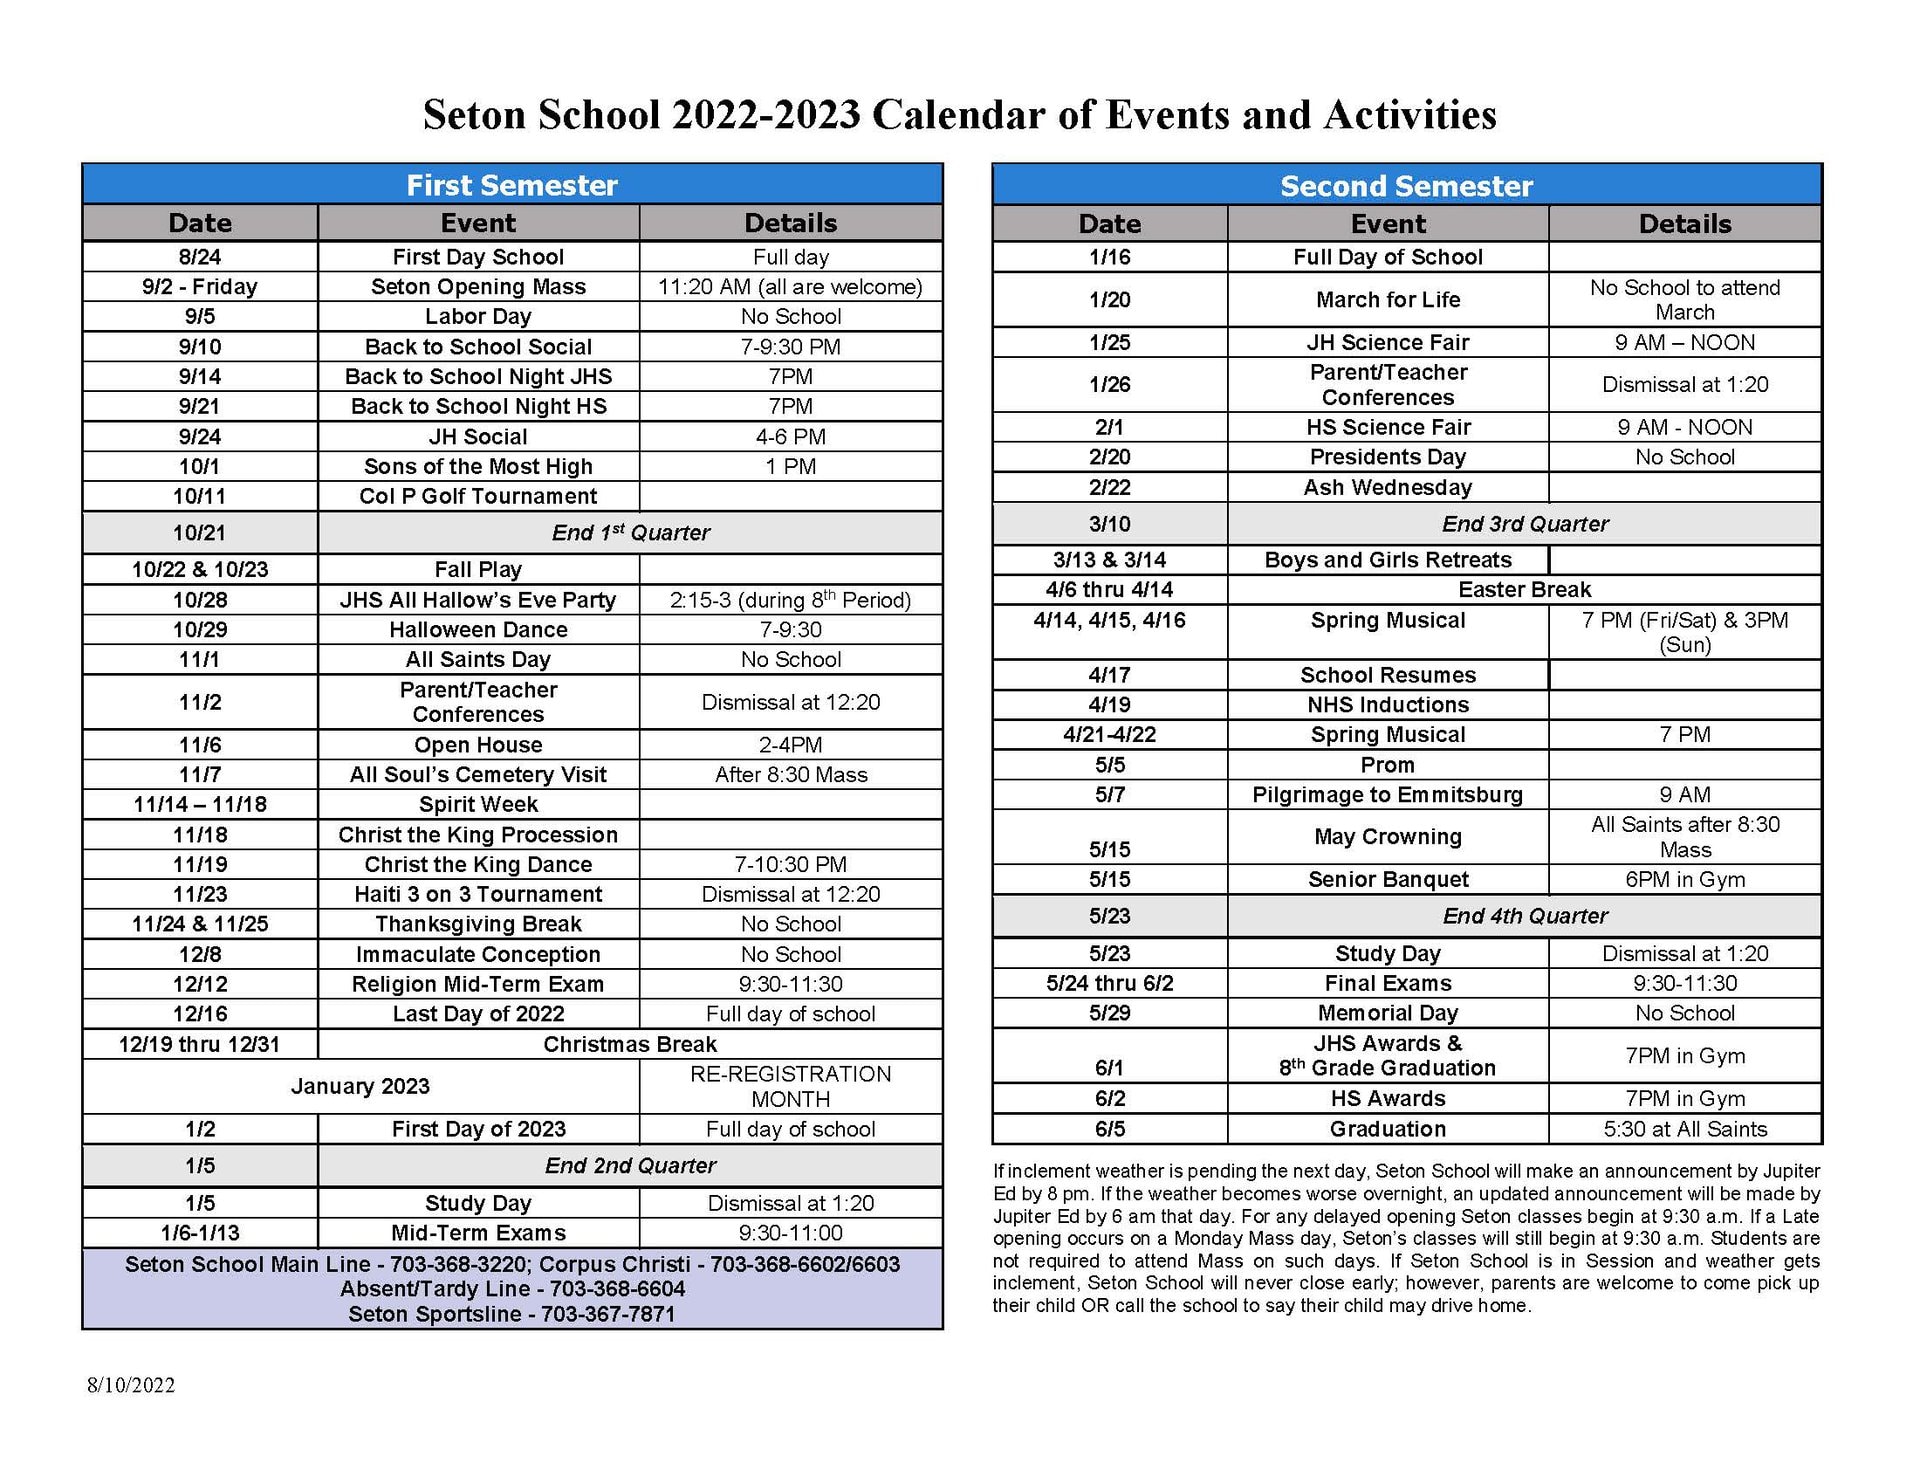 20222023 Seton School Calendar of Events and Activities Seton School